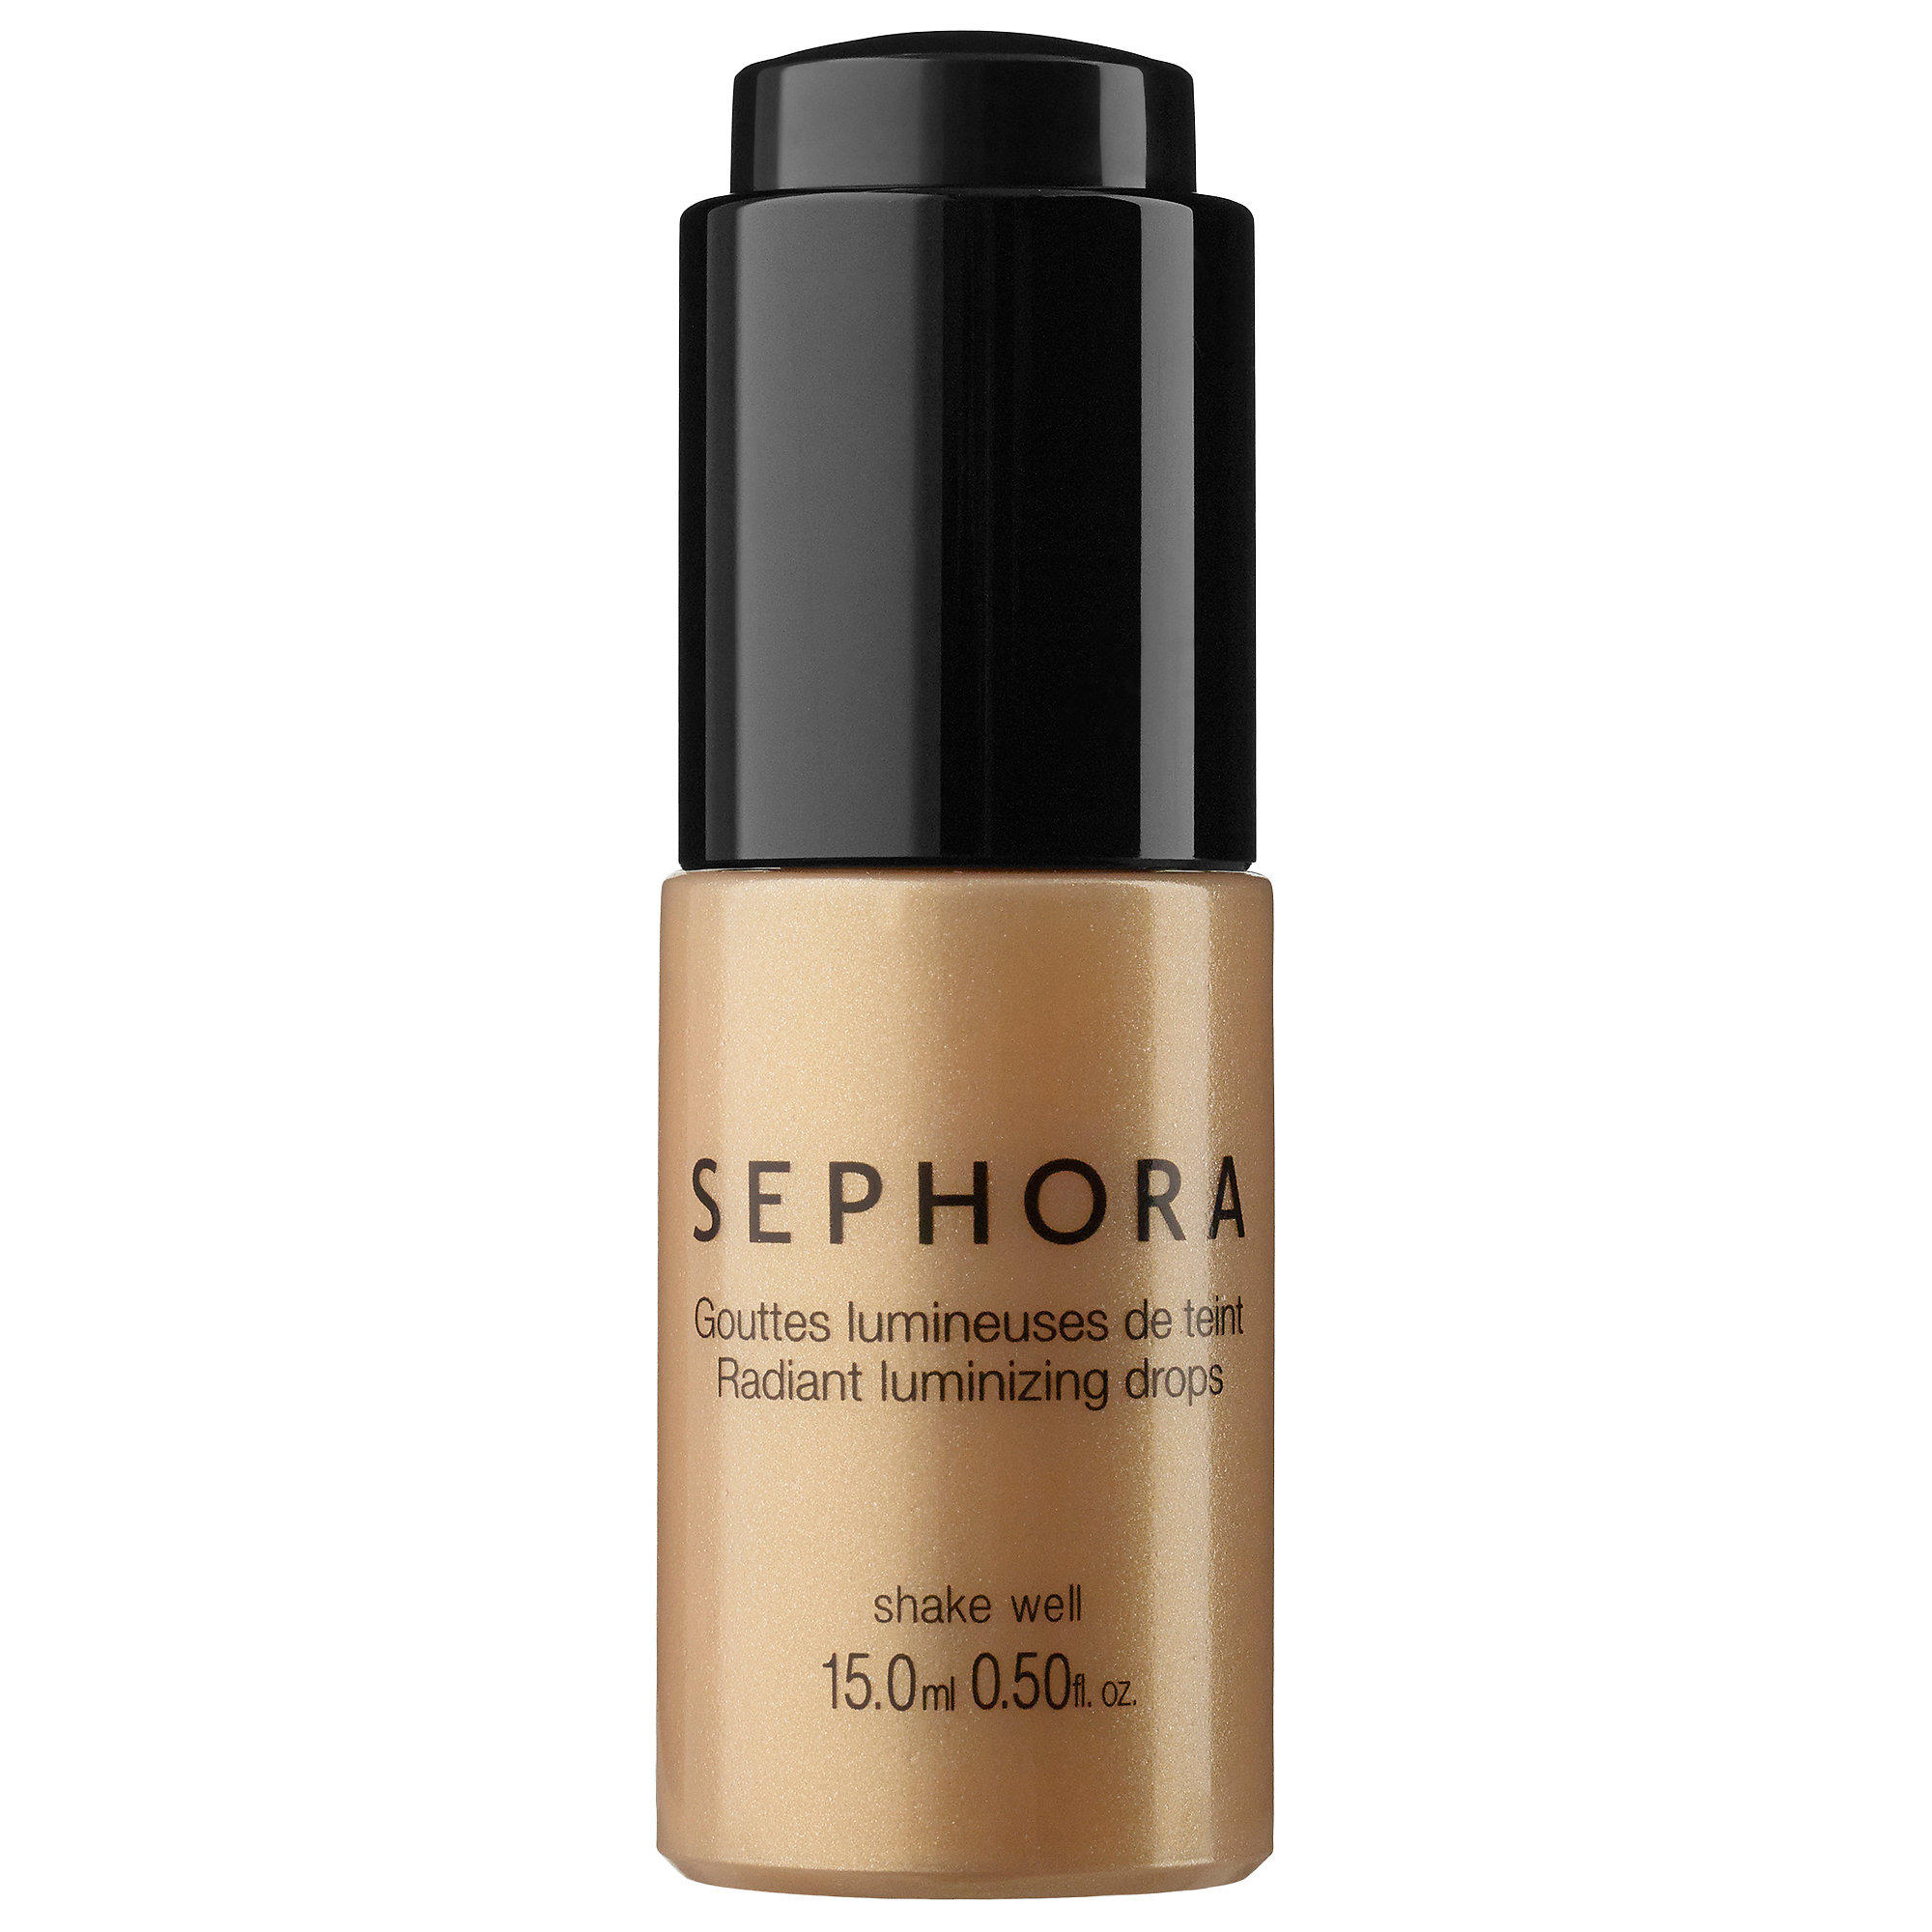 Sephora Radiant Luminizing Drops Ultra Light